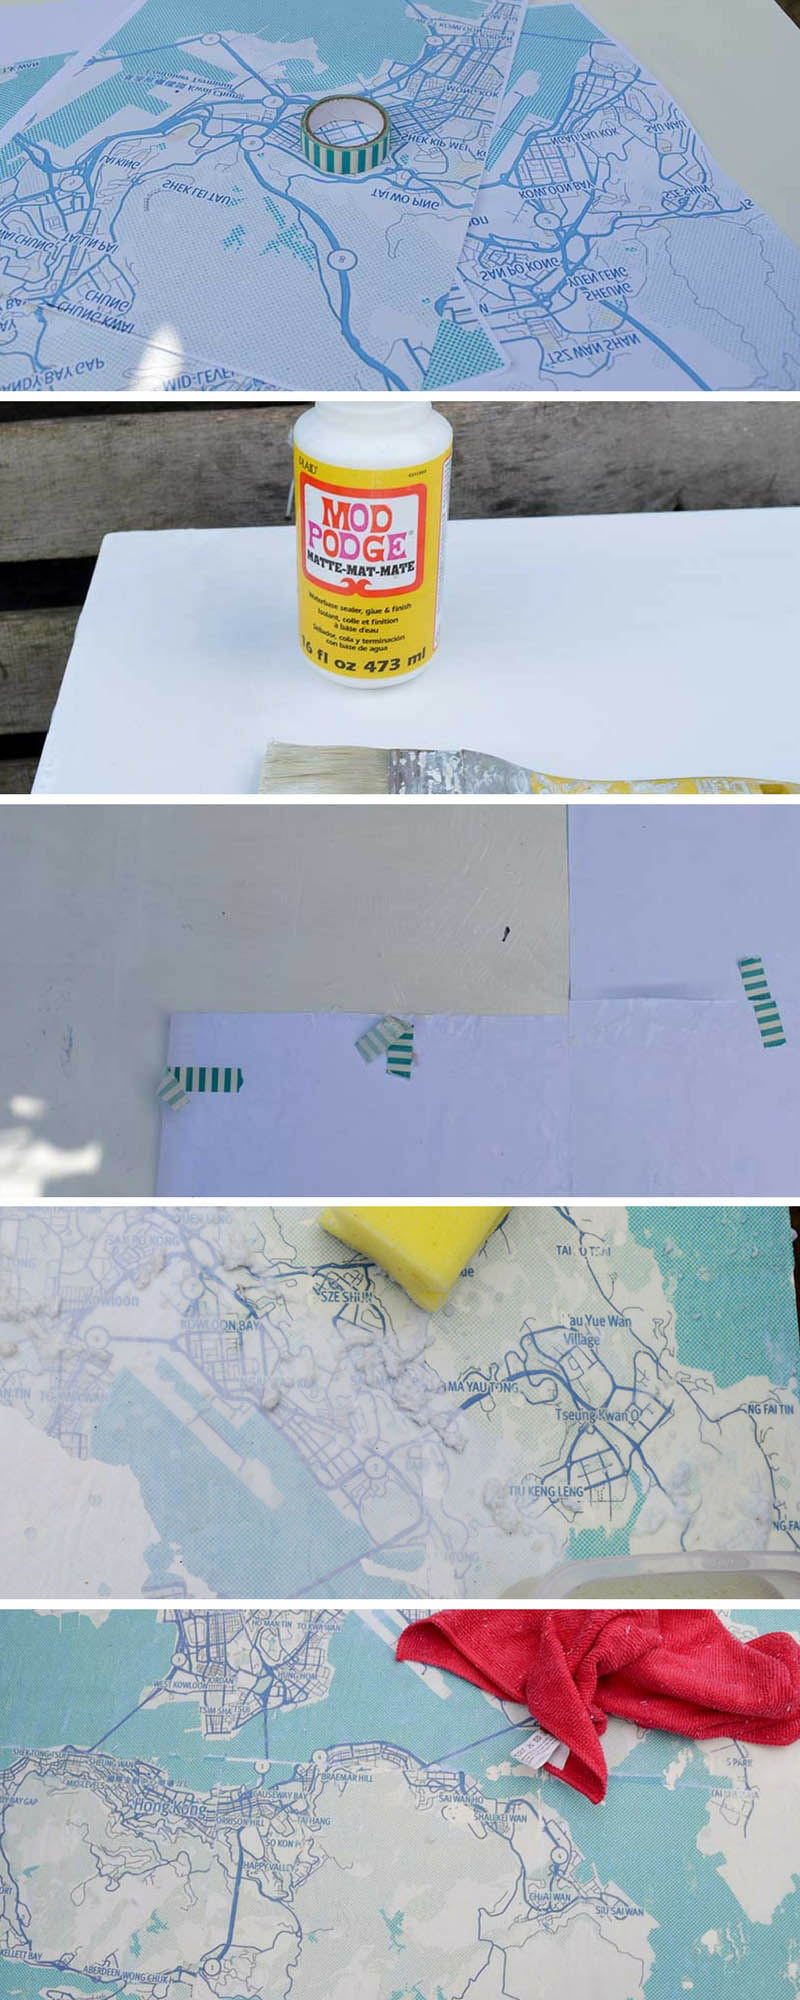 Mapbox map image transfer to an Ikea kids table